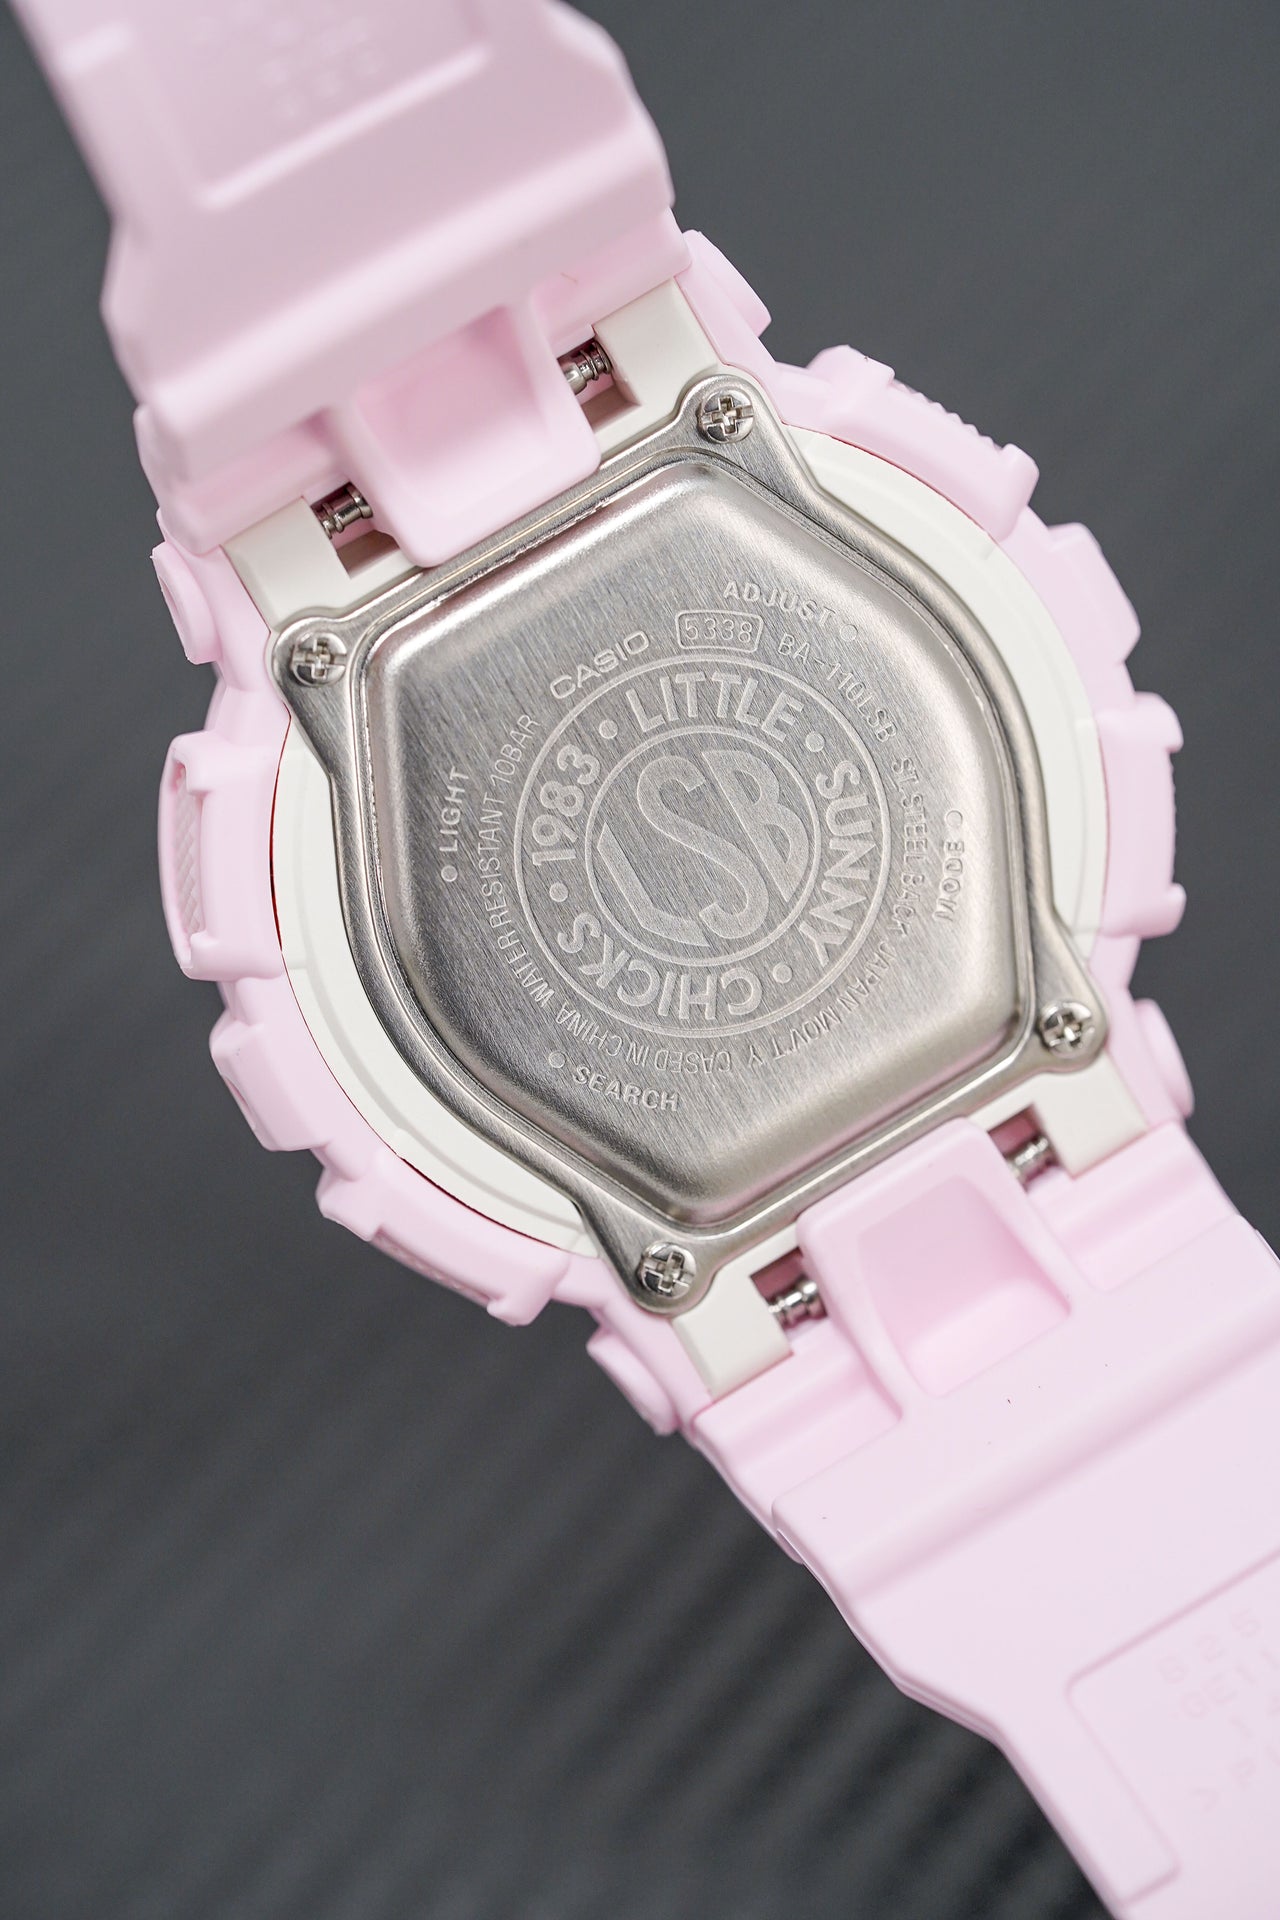 Casio Baby-G Watch Ladies Limited Edition Pink Floral BA-110LSB-4ADR